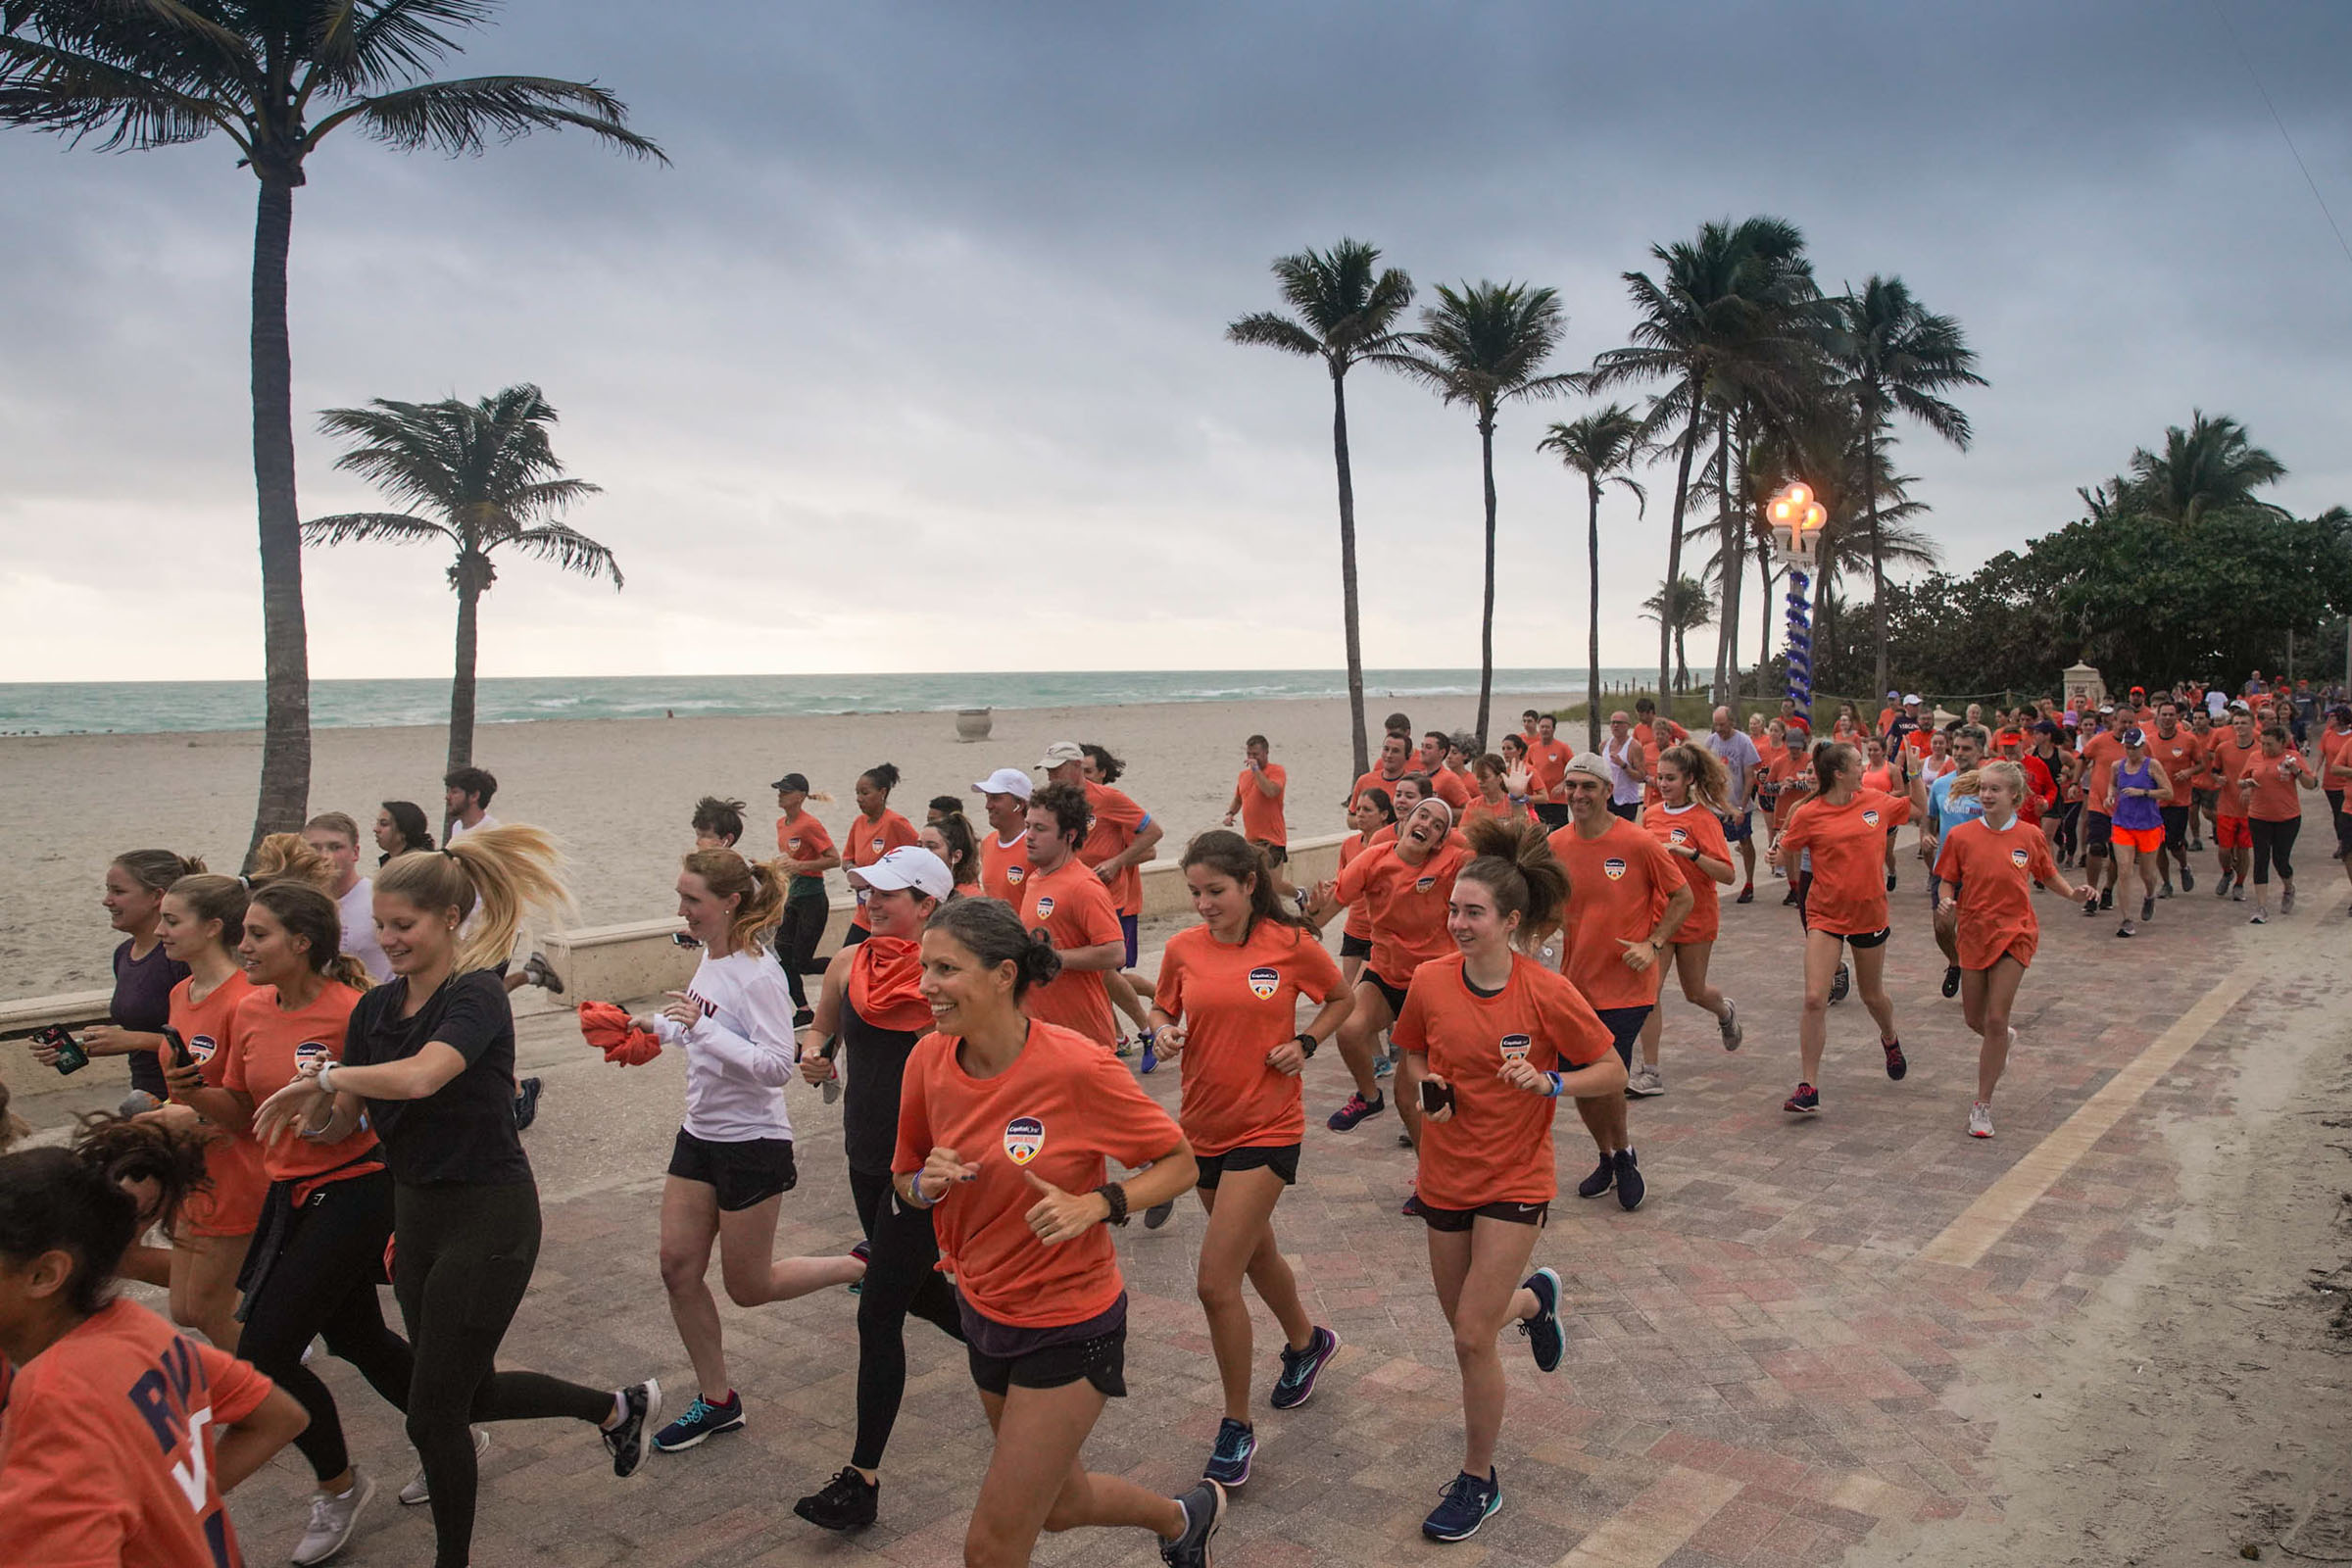 Group of people dressed in Orange running on the boardwalk